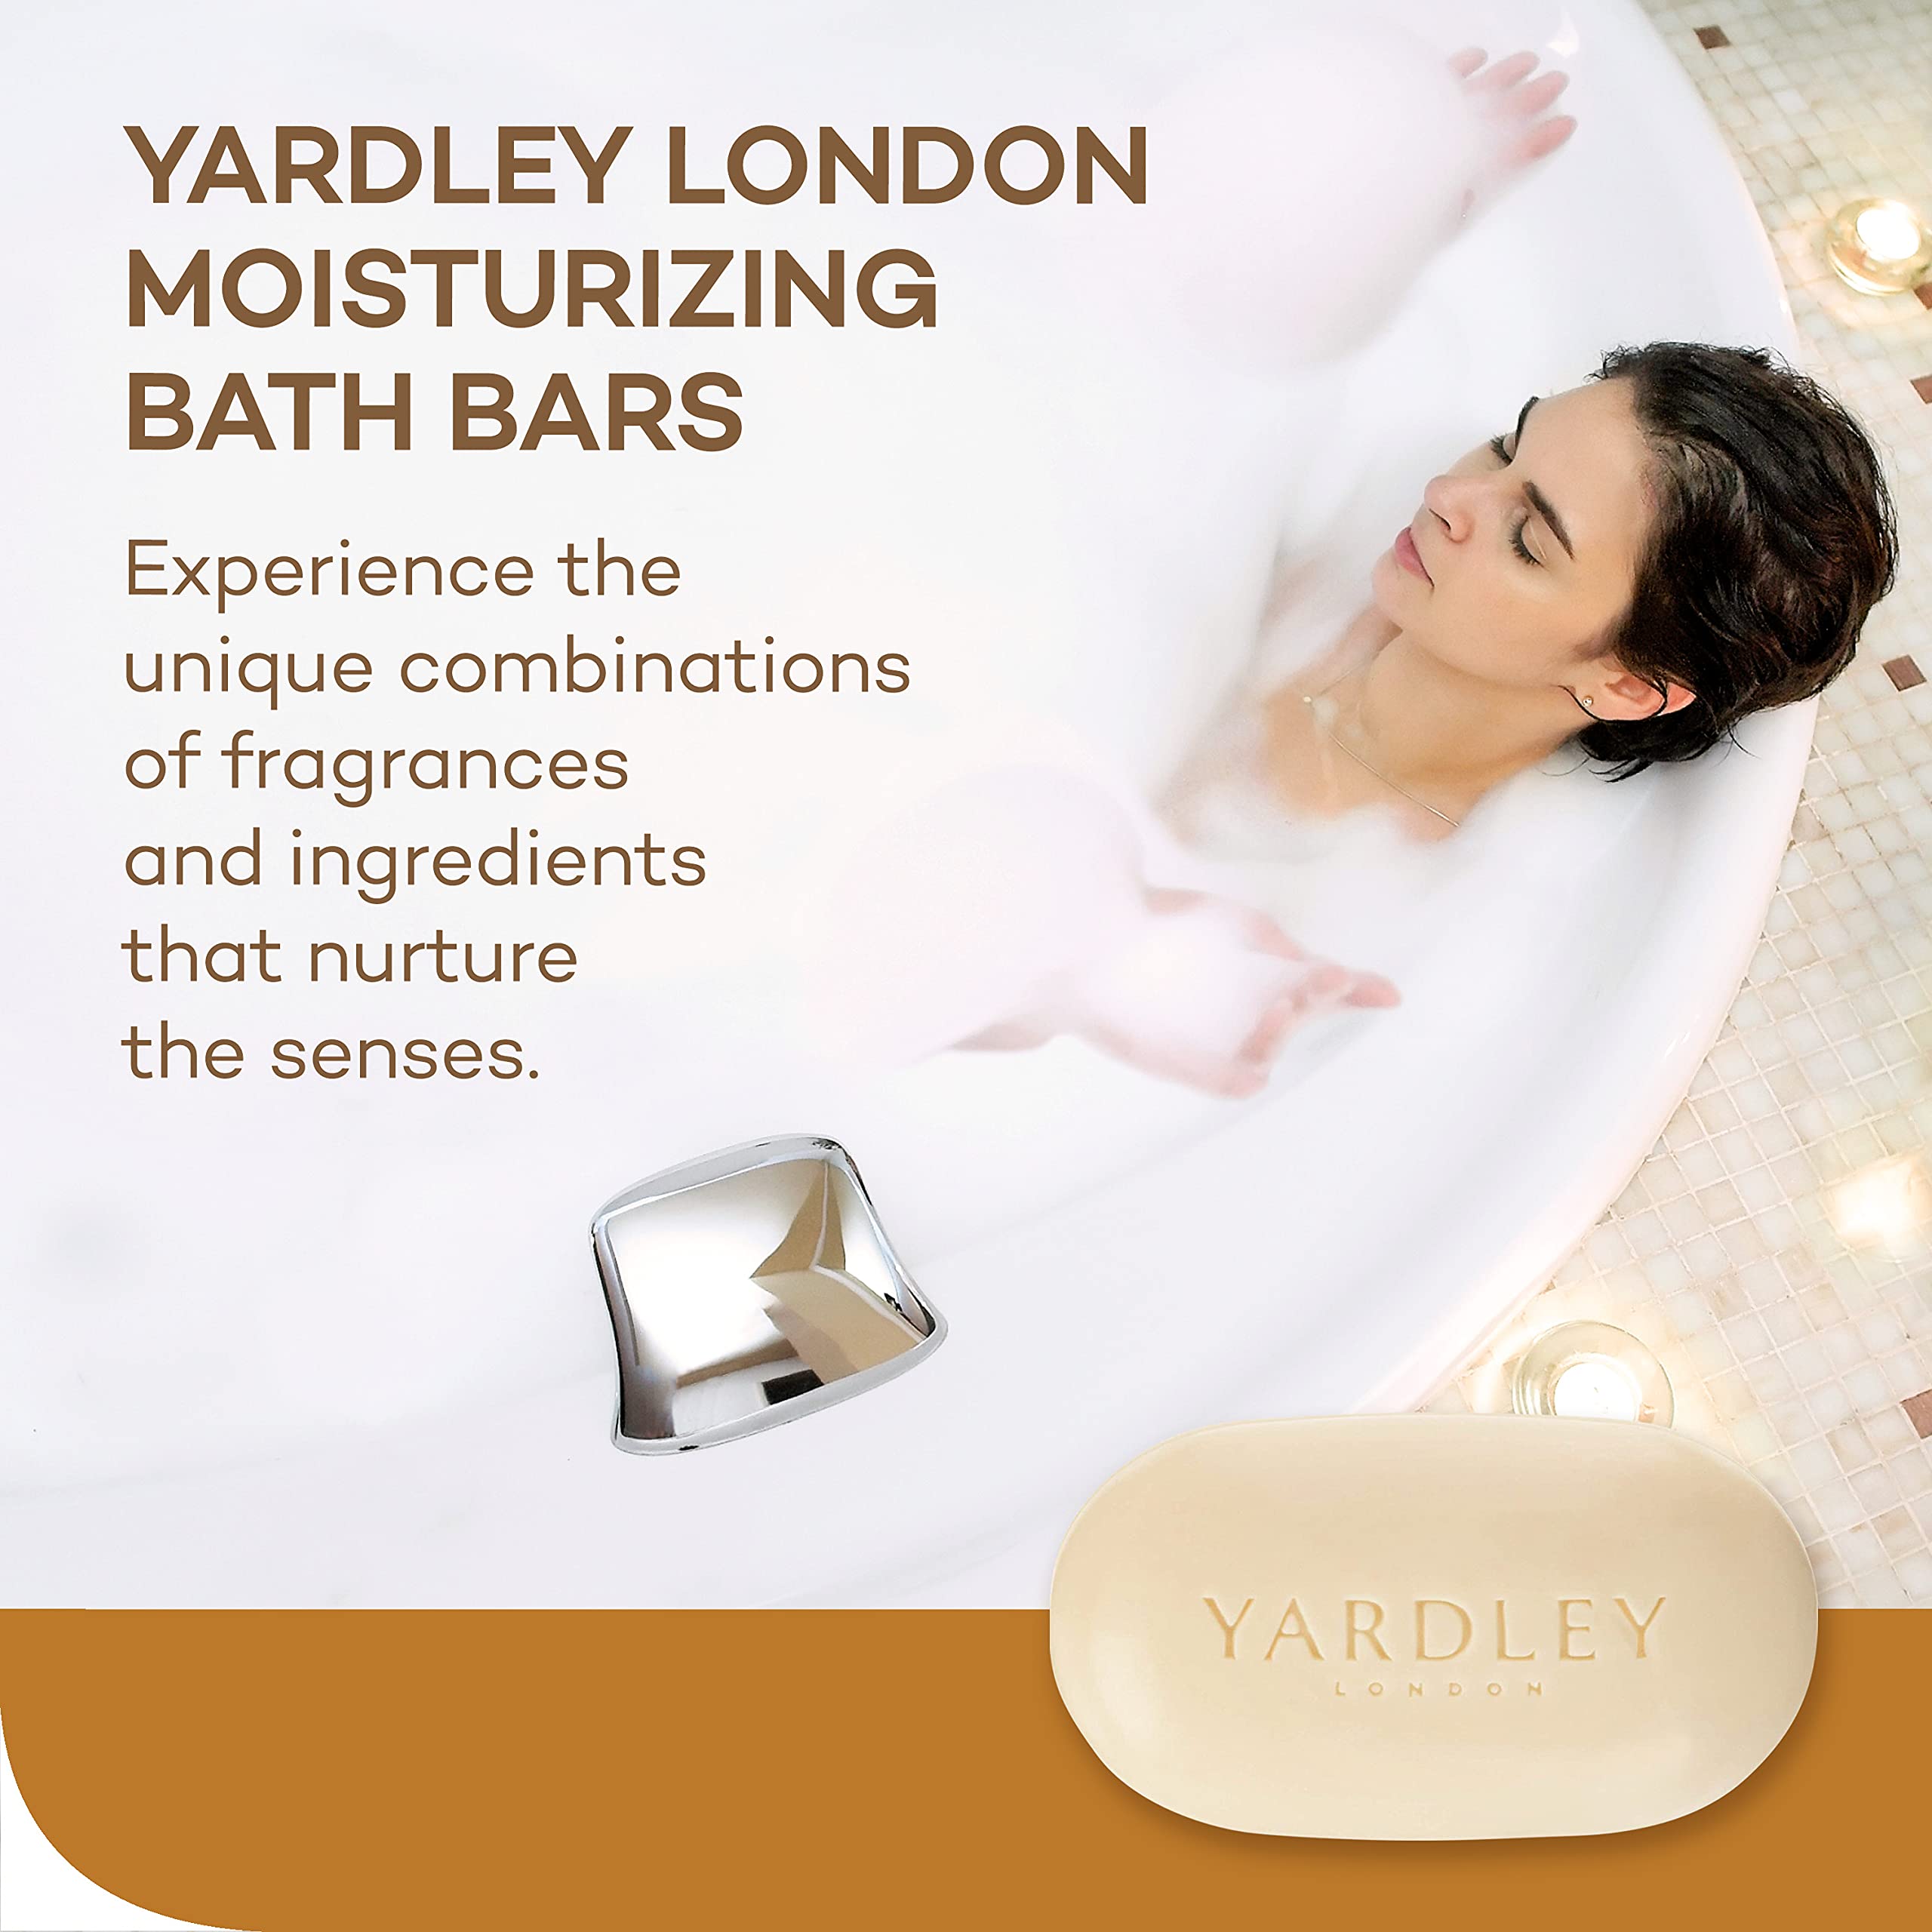 4.0-Oz Yardley London Moisturizing Bath Soap Bar (Oatmeal & Almond) $0.83 + Free Shipping w/ Prime or Orders $25